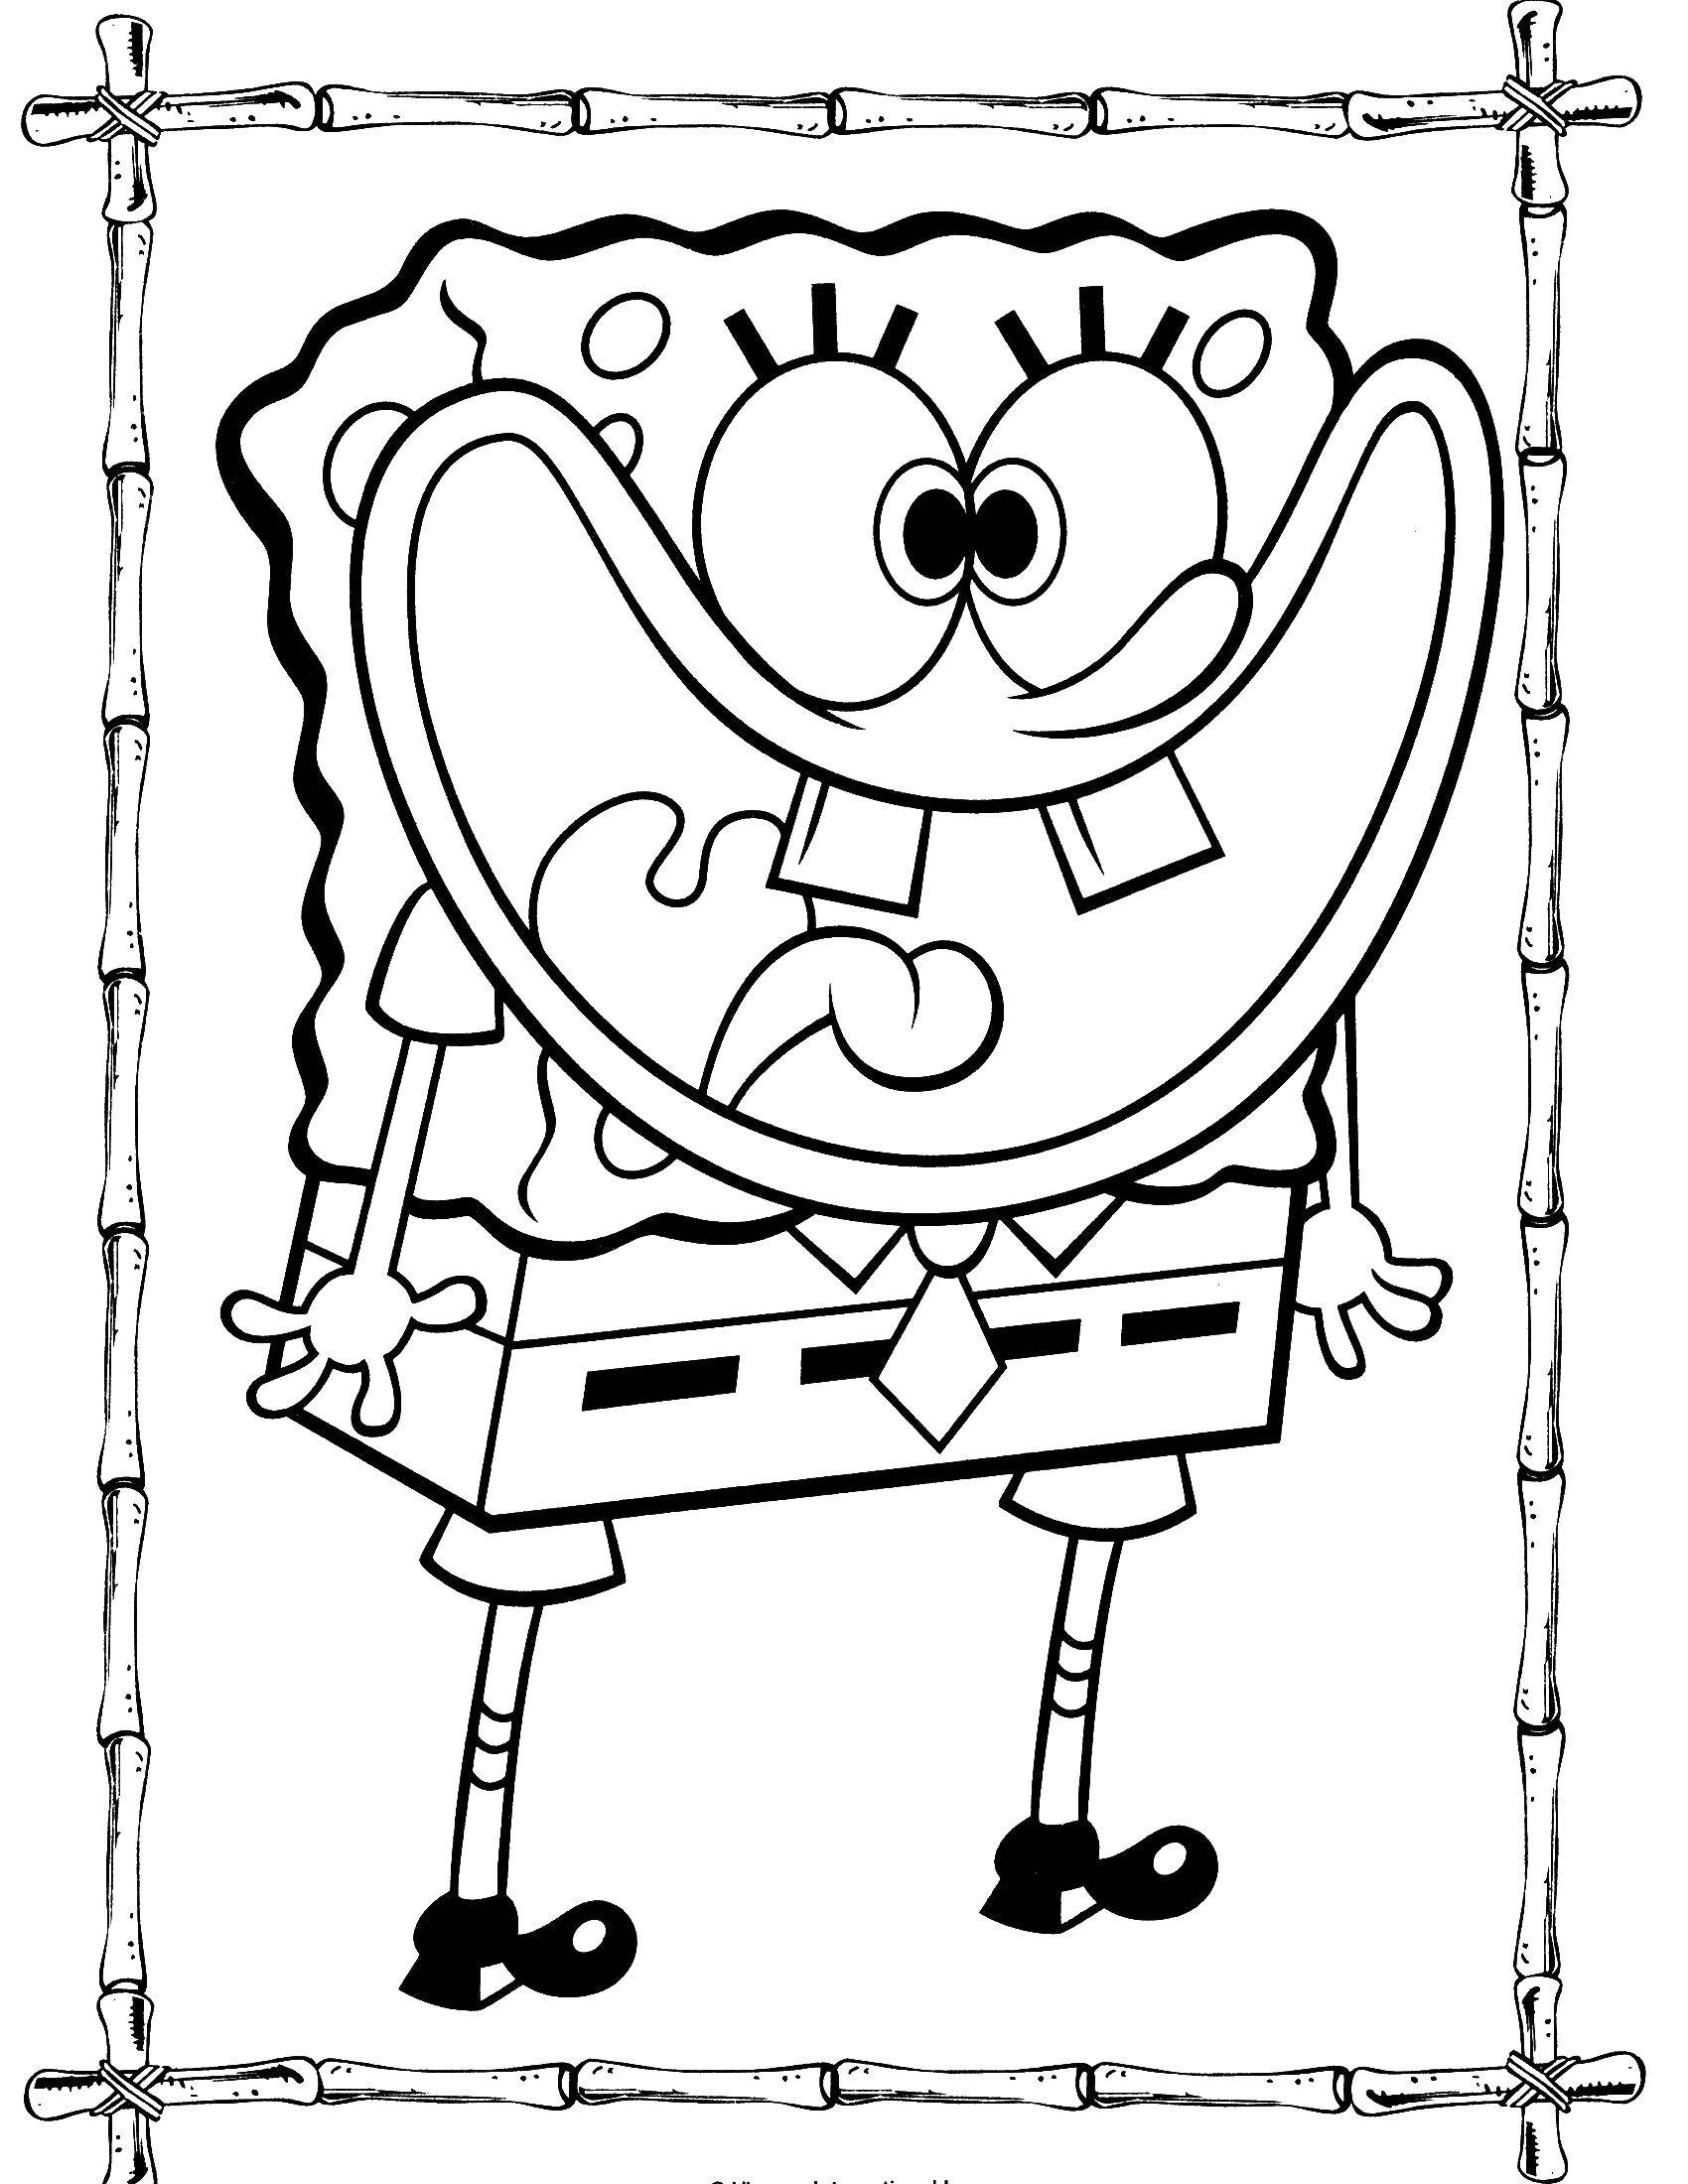 Coloring Spongebob. Category Spongebob. Tags:  spongebob, Patrick.